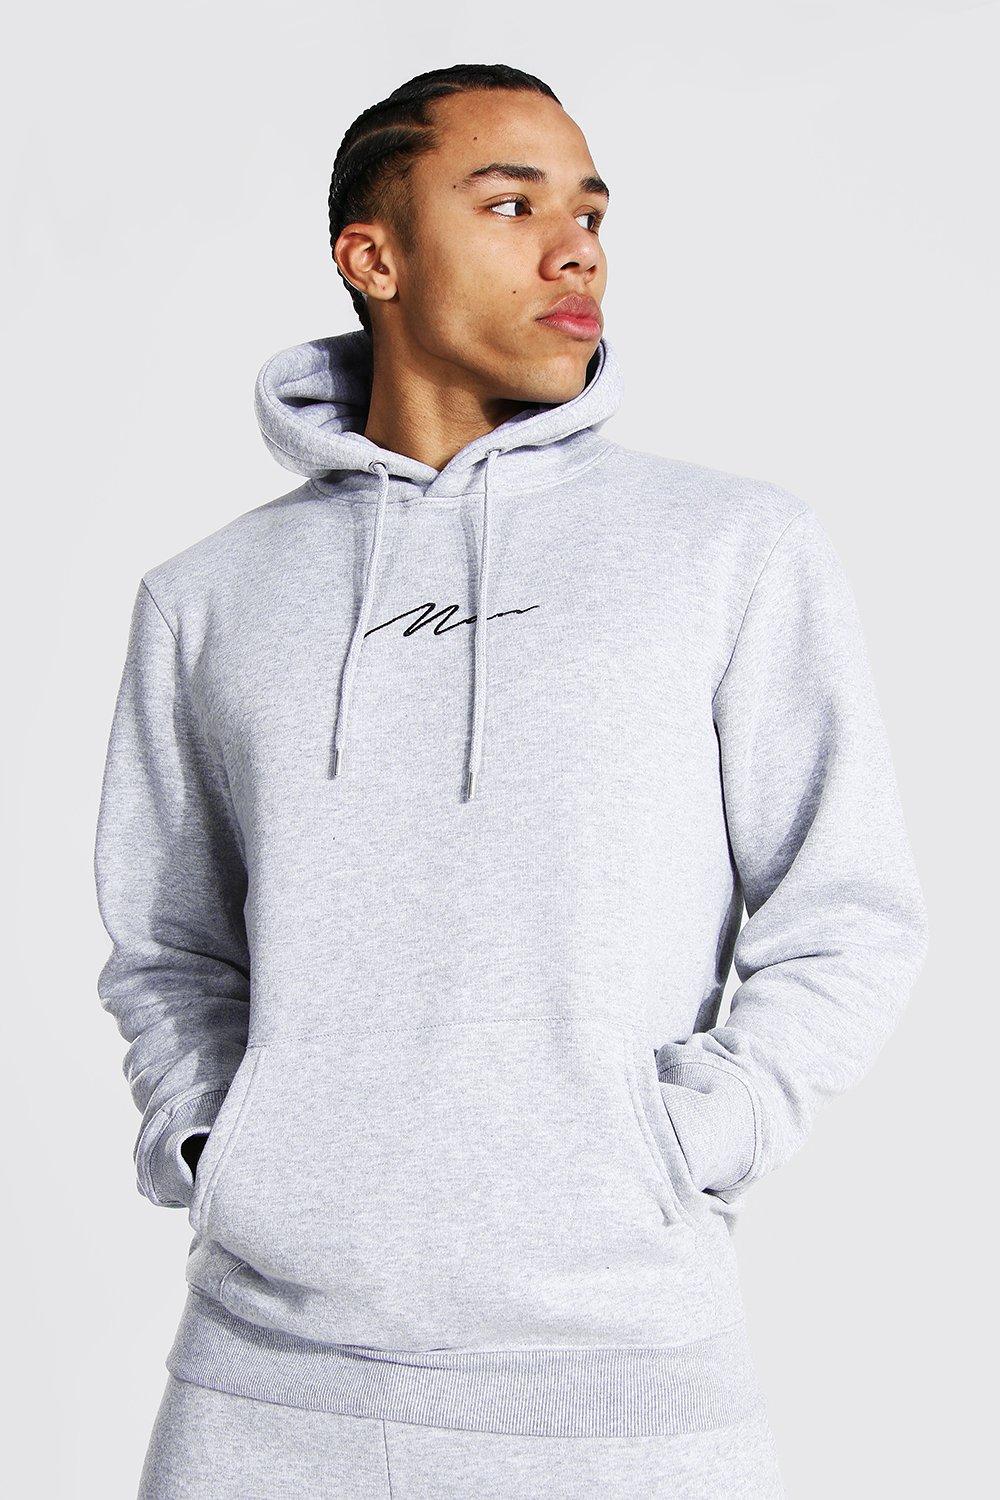 embroidered signature hoodie